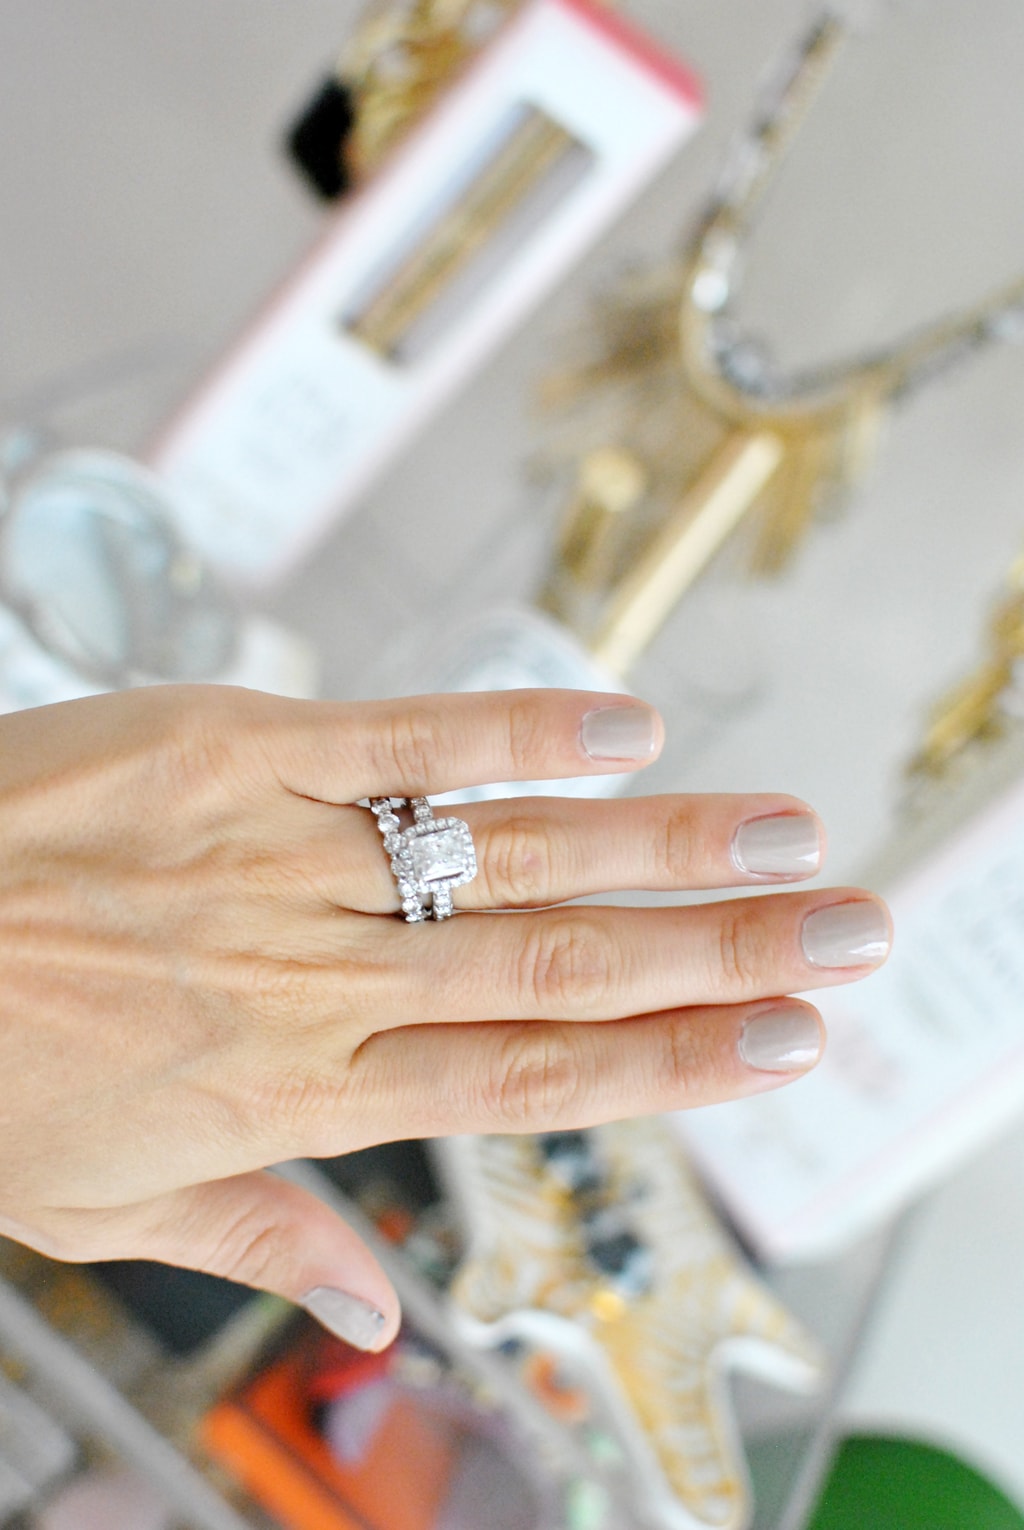 Premium Photo | Jeweller hand cleaning and polishing vintage jewelry  diamond ring closeup